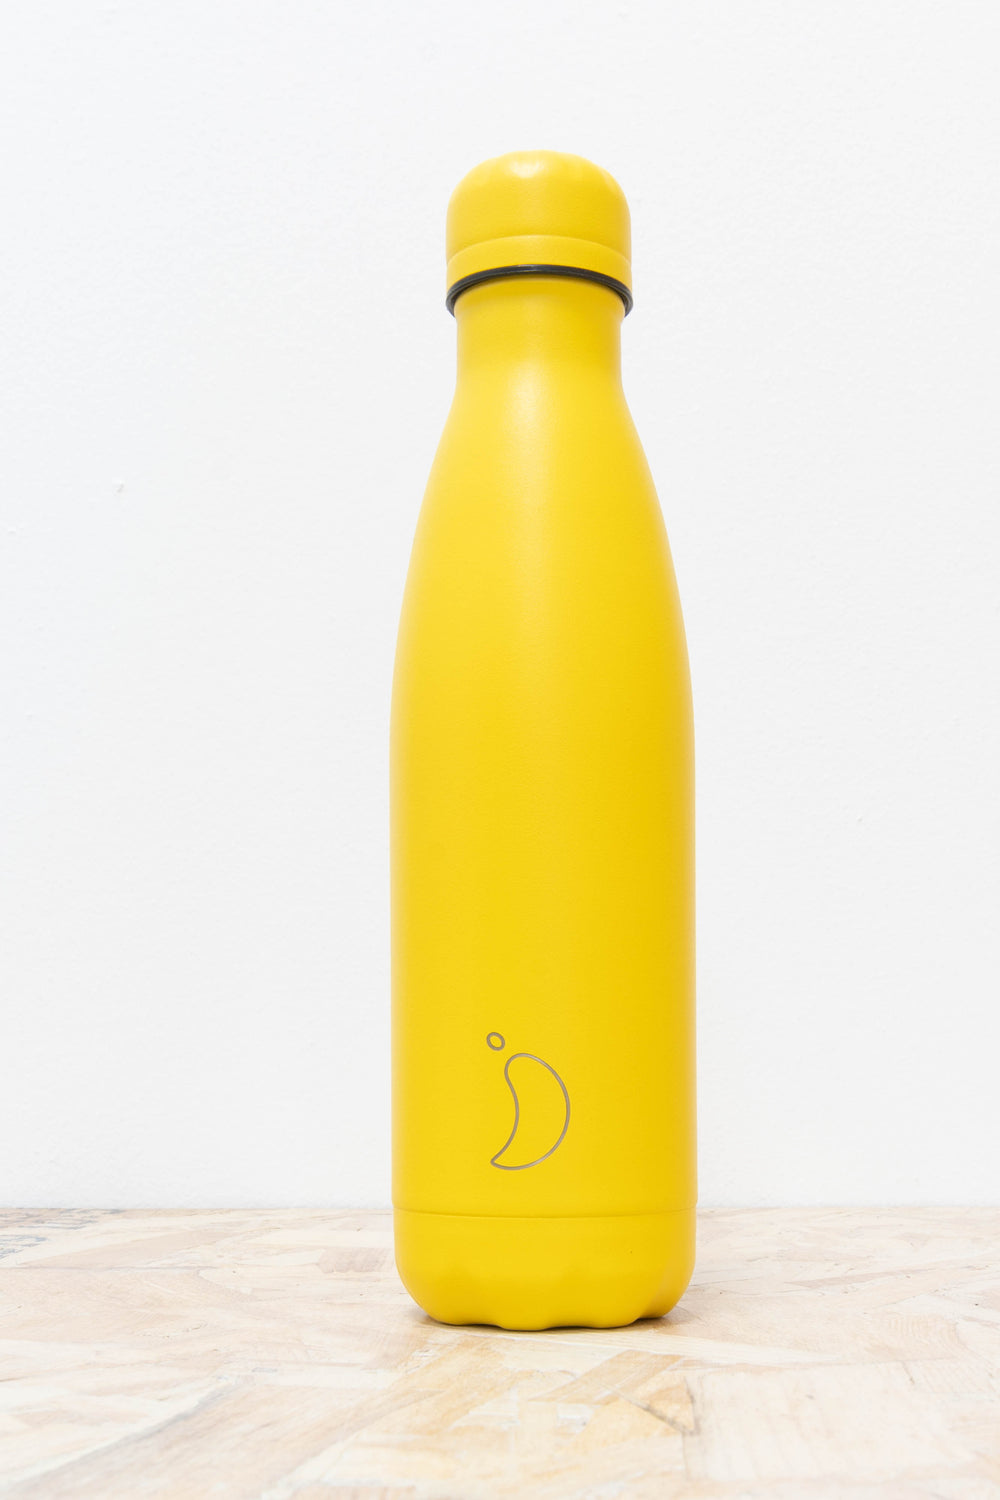 Chilly's - Original 750ml Bottle – Dick's Climbing